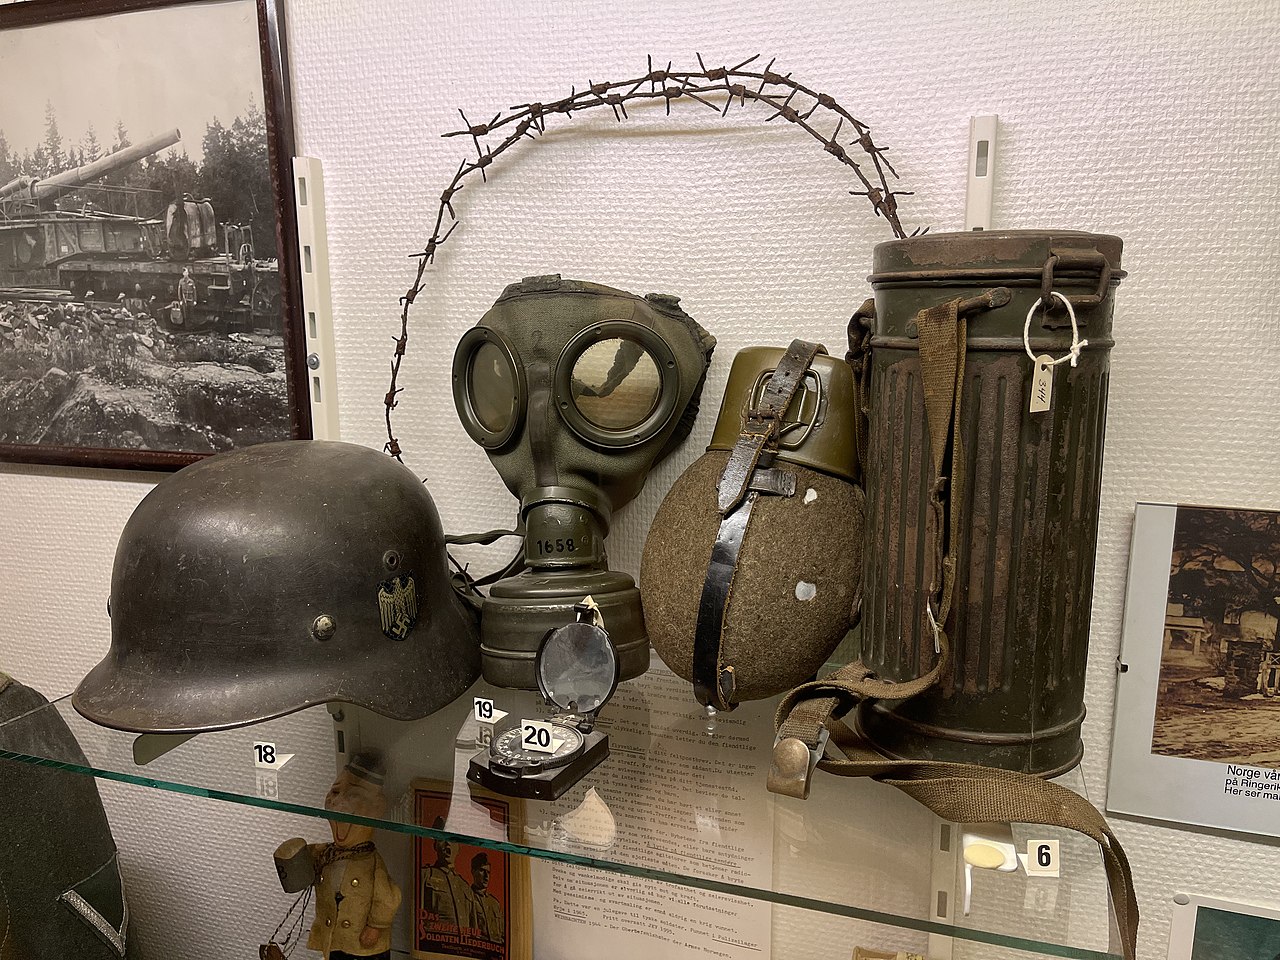 File:Wehrmacht Heer (WW2 German Army) Stahlhelm (helmet) Gasmaske Büchse-Trommel-Dose-Behälter (gas canister) Feldflasche (canteen bottle) Bakelit Marschkompass (compass) etc. Hjemmefrontmuseet Rakkestad war museum Norway 2021 02.jpg Wikimedia ...